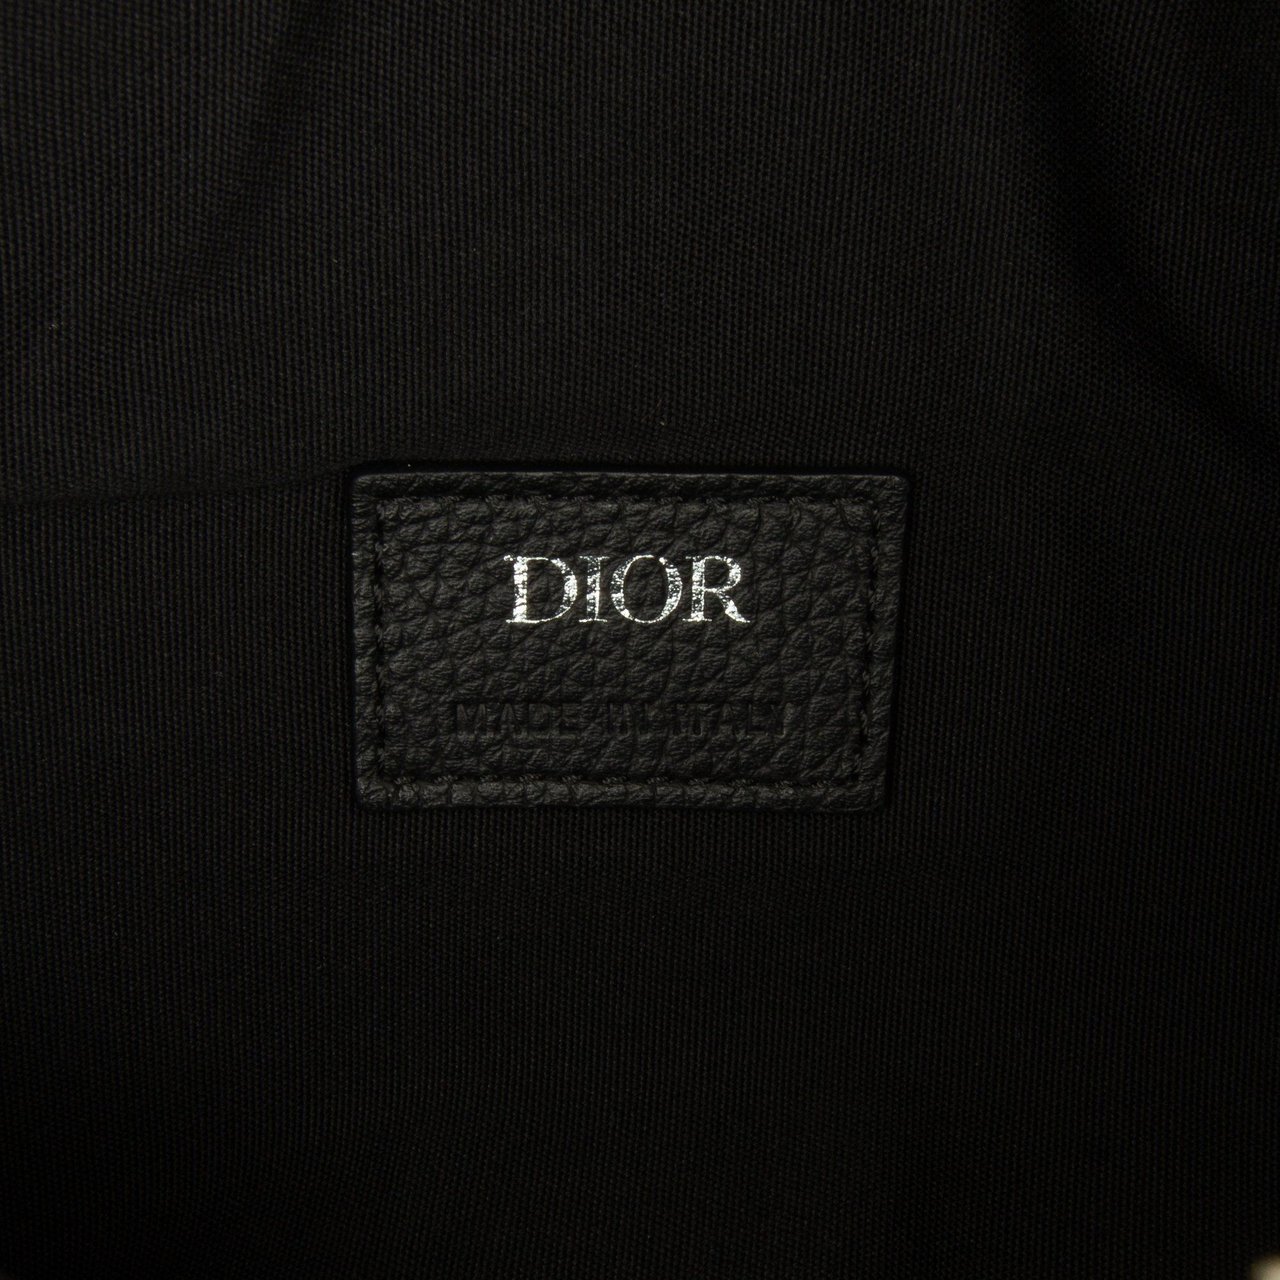 Dior Leather Saddle Crossbody Bag Zwart